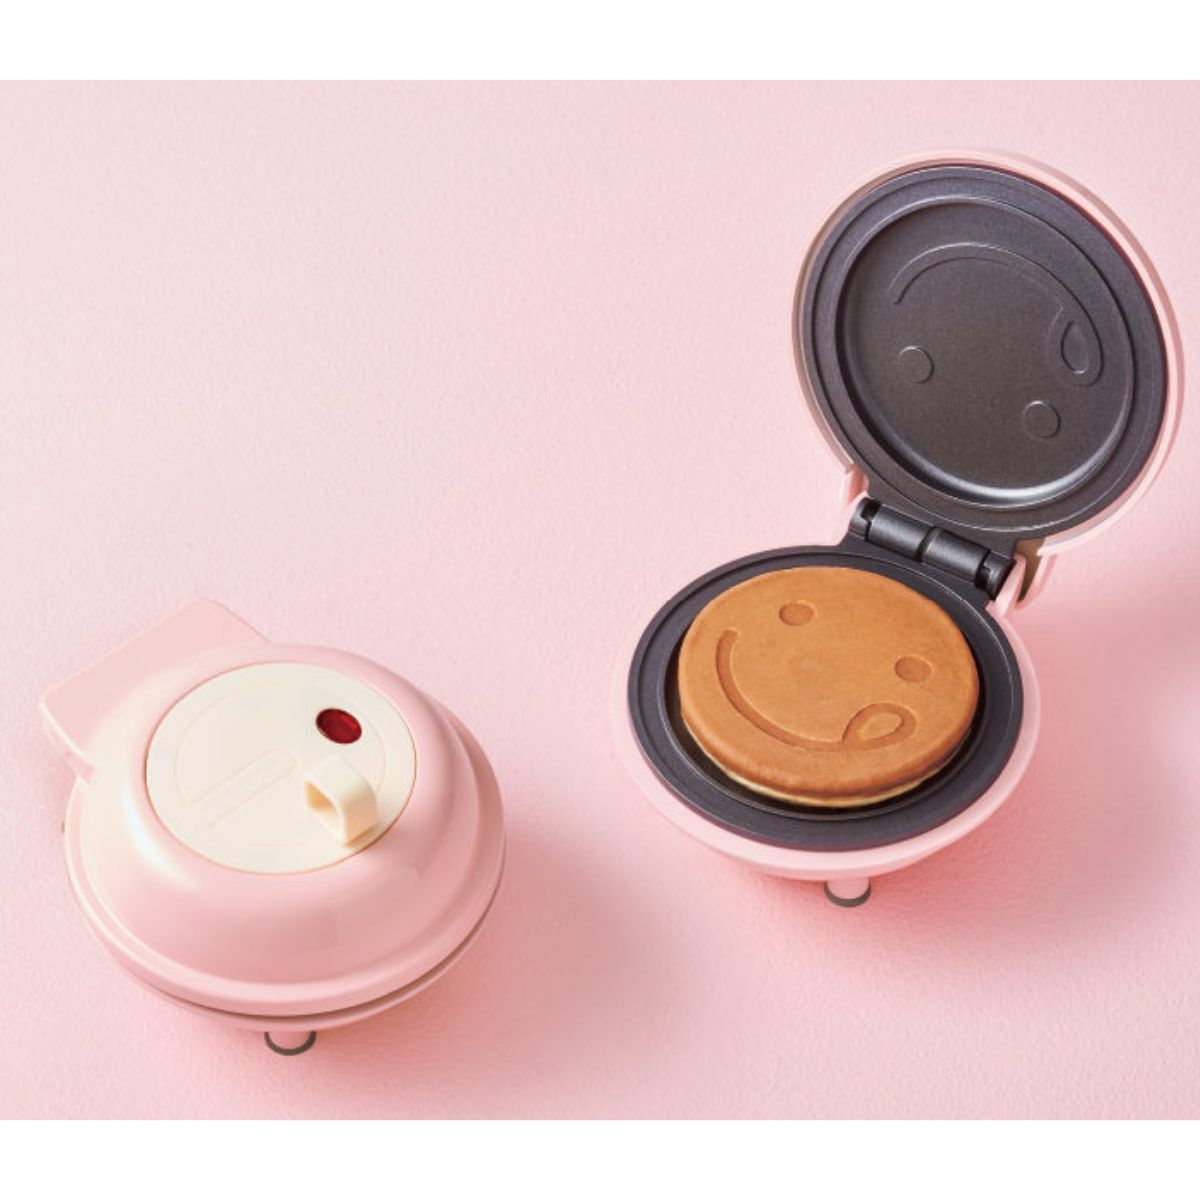 récolte Smile Baker Mini – Pink 微笑鬆餅機 - 粉紅色 RSM-2(PK)